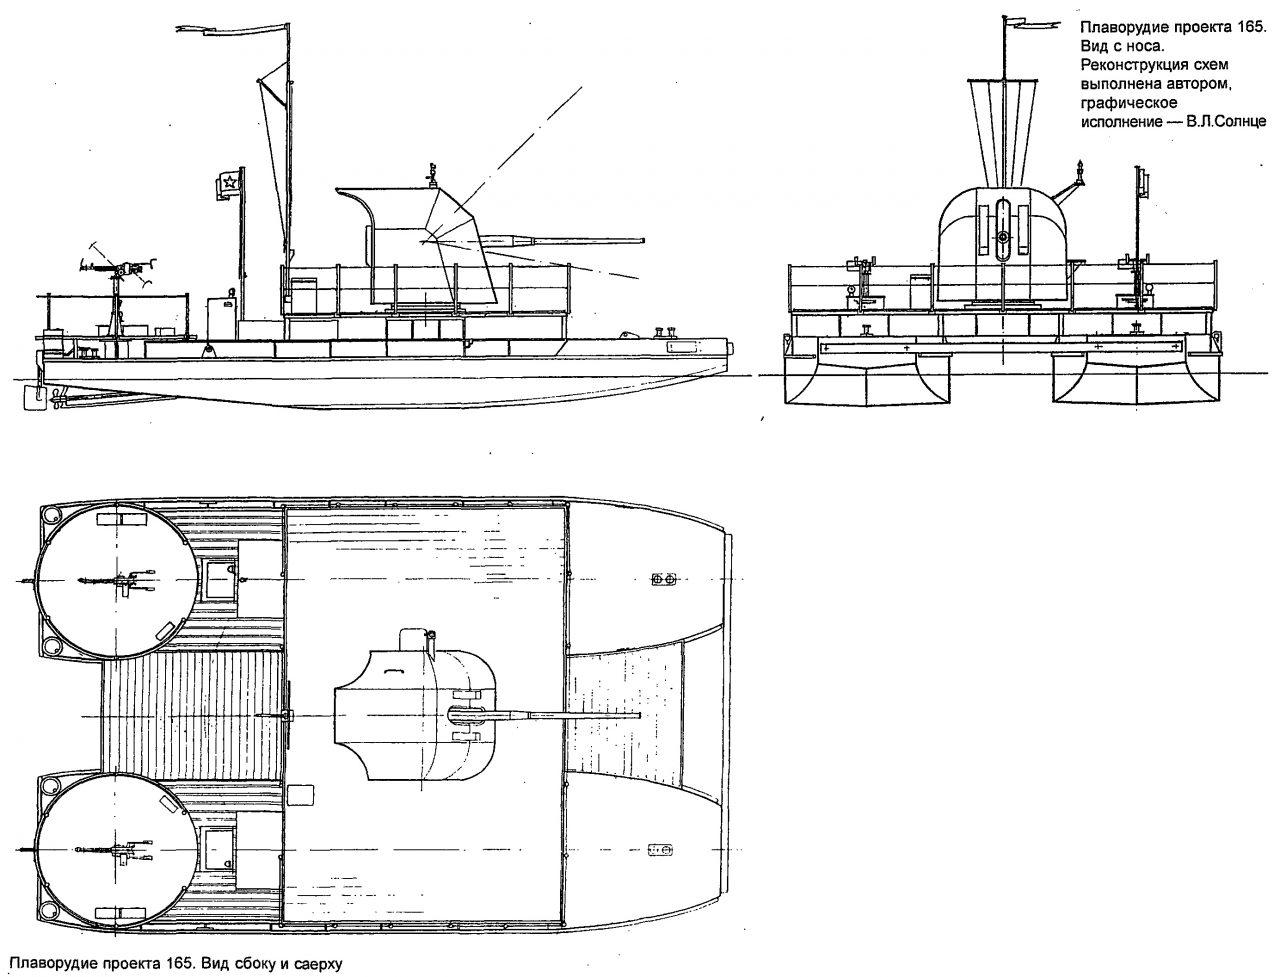 100-мм плаворудие типа ДБ (проект 165)